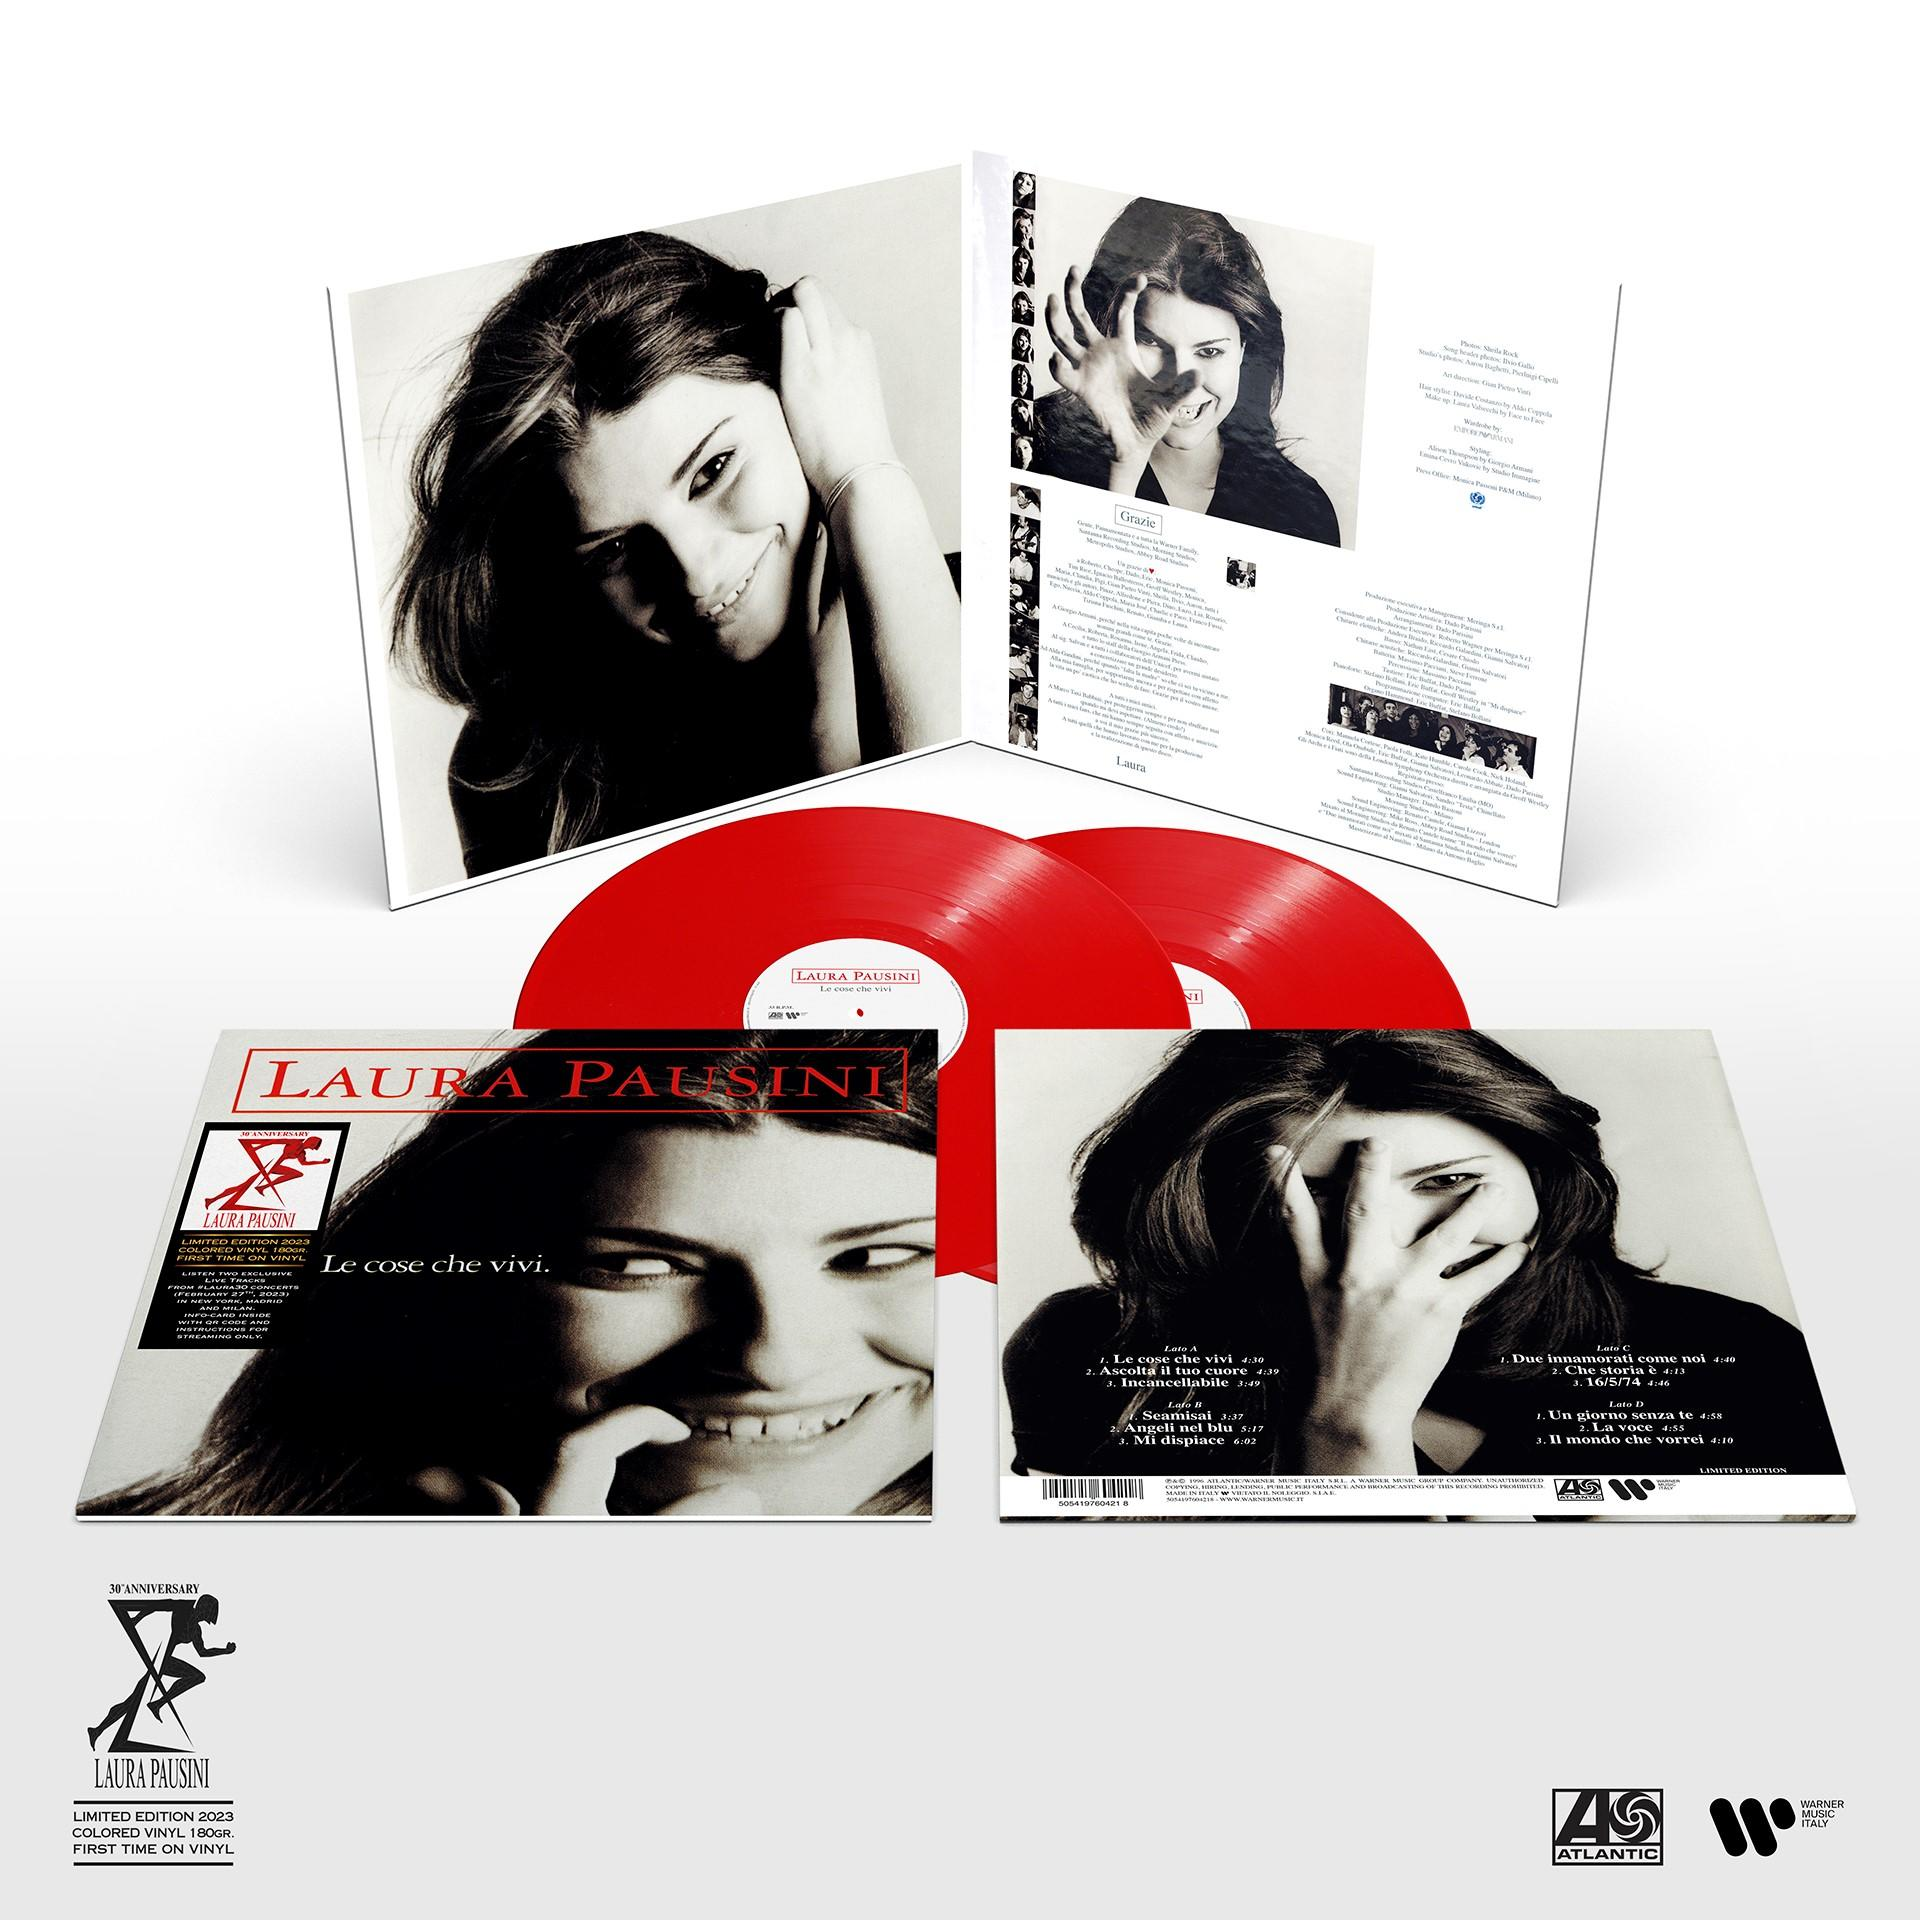 Laura Le (Vinyl) Pausini cose Vinyl) - Red vivi(Ltd.Edition che -